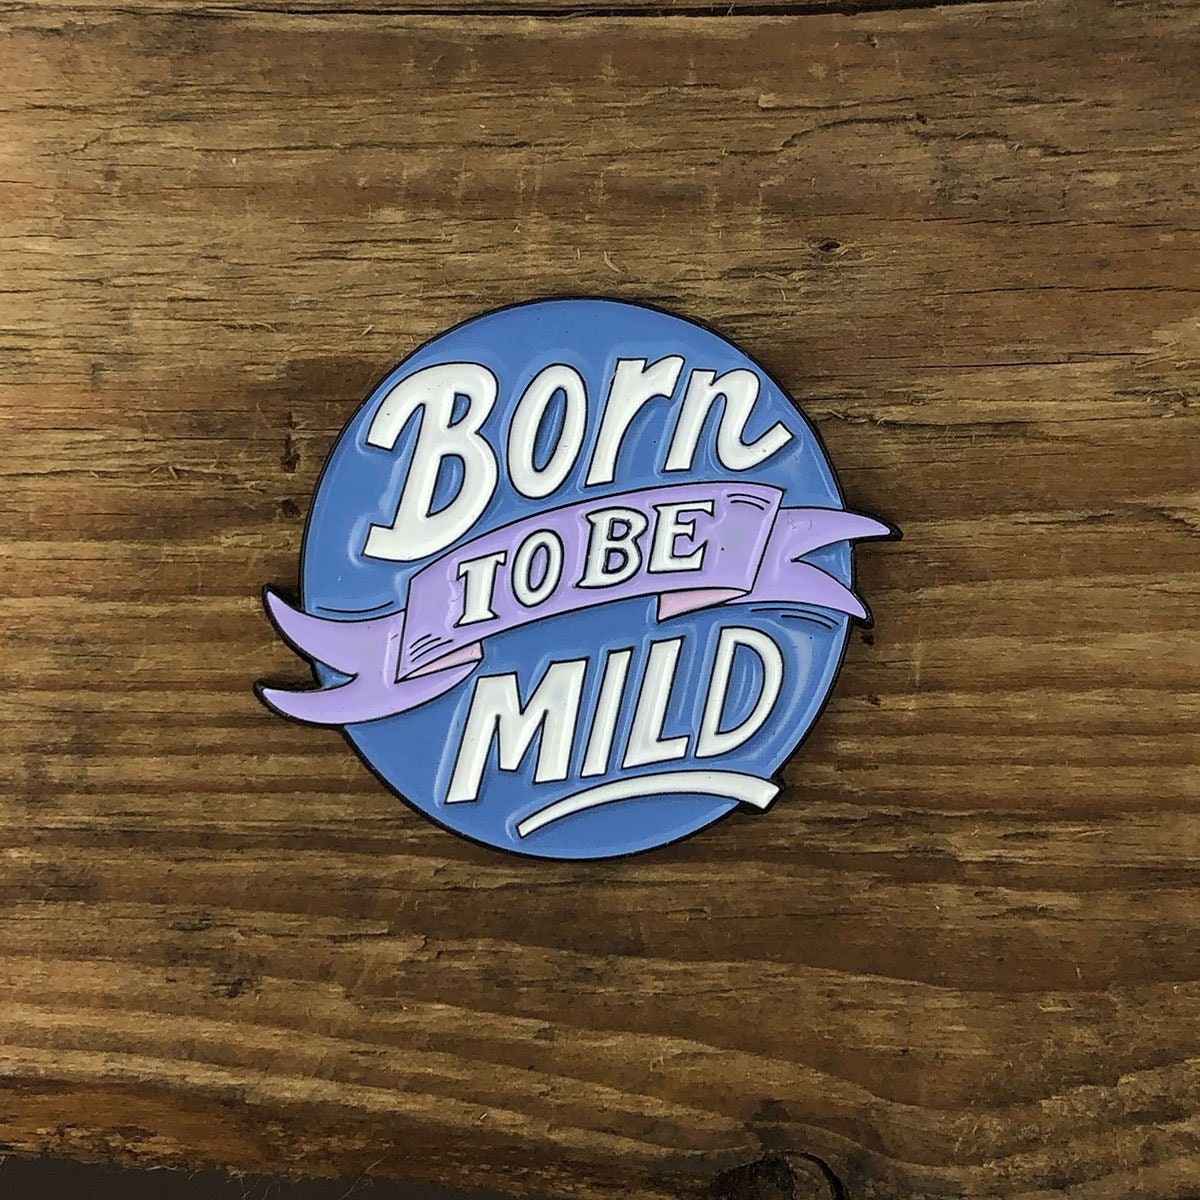 Born to be Mild pin!